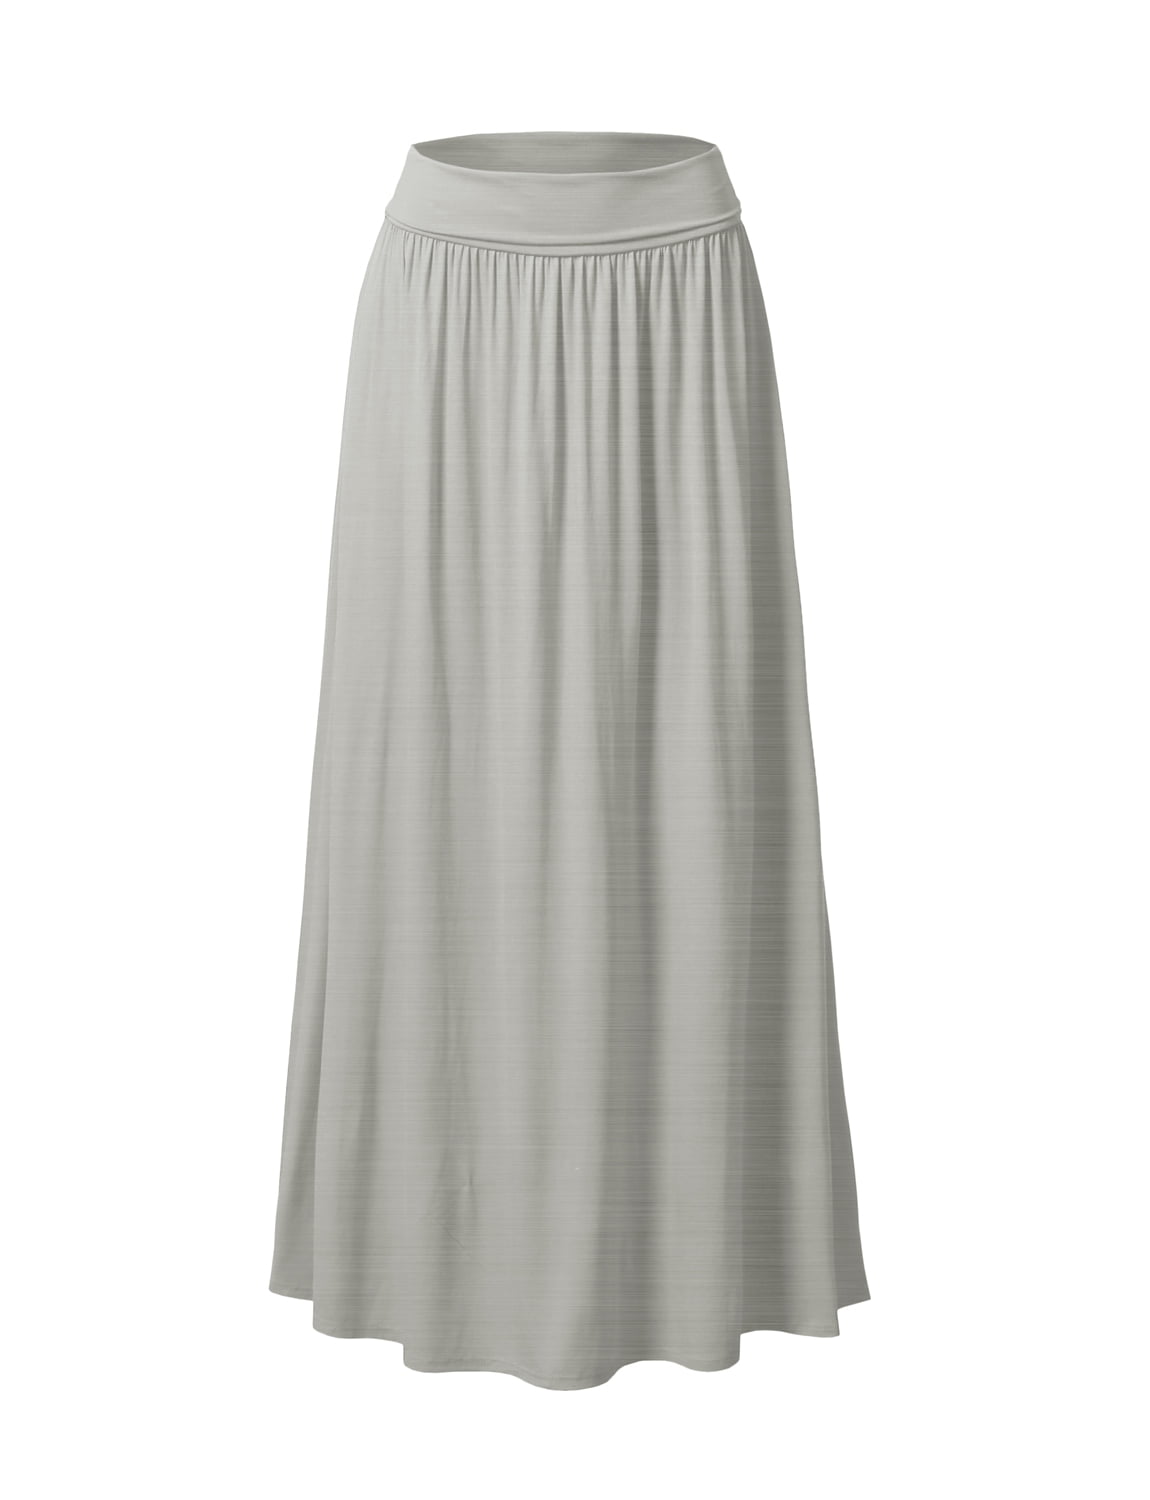 Next Girls Black Floral Ruched//elastic waist lined Skirt Ages 3 4 5 8 SALE